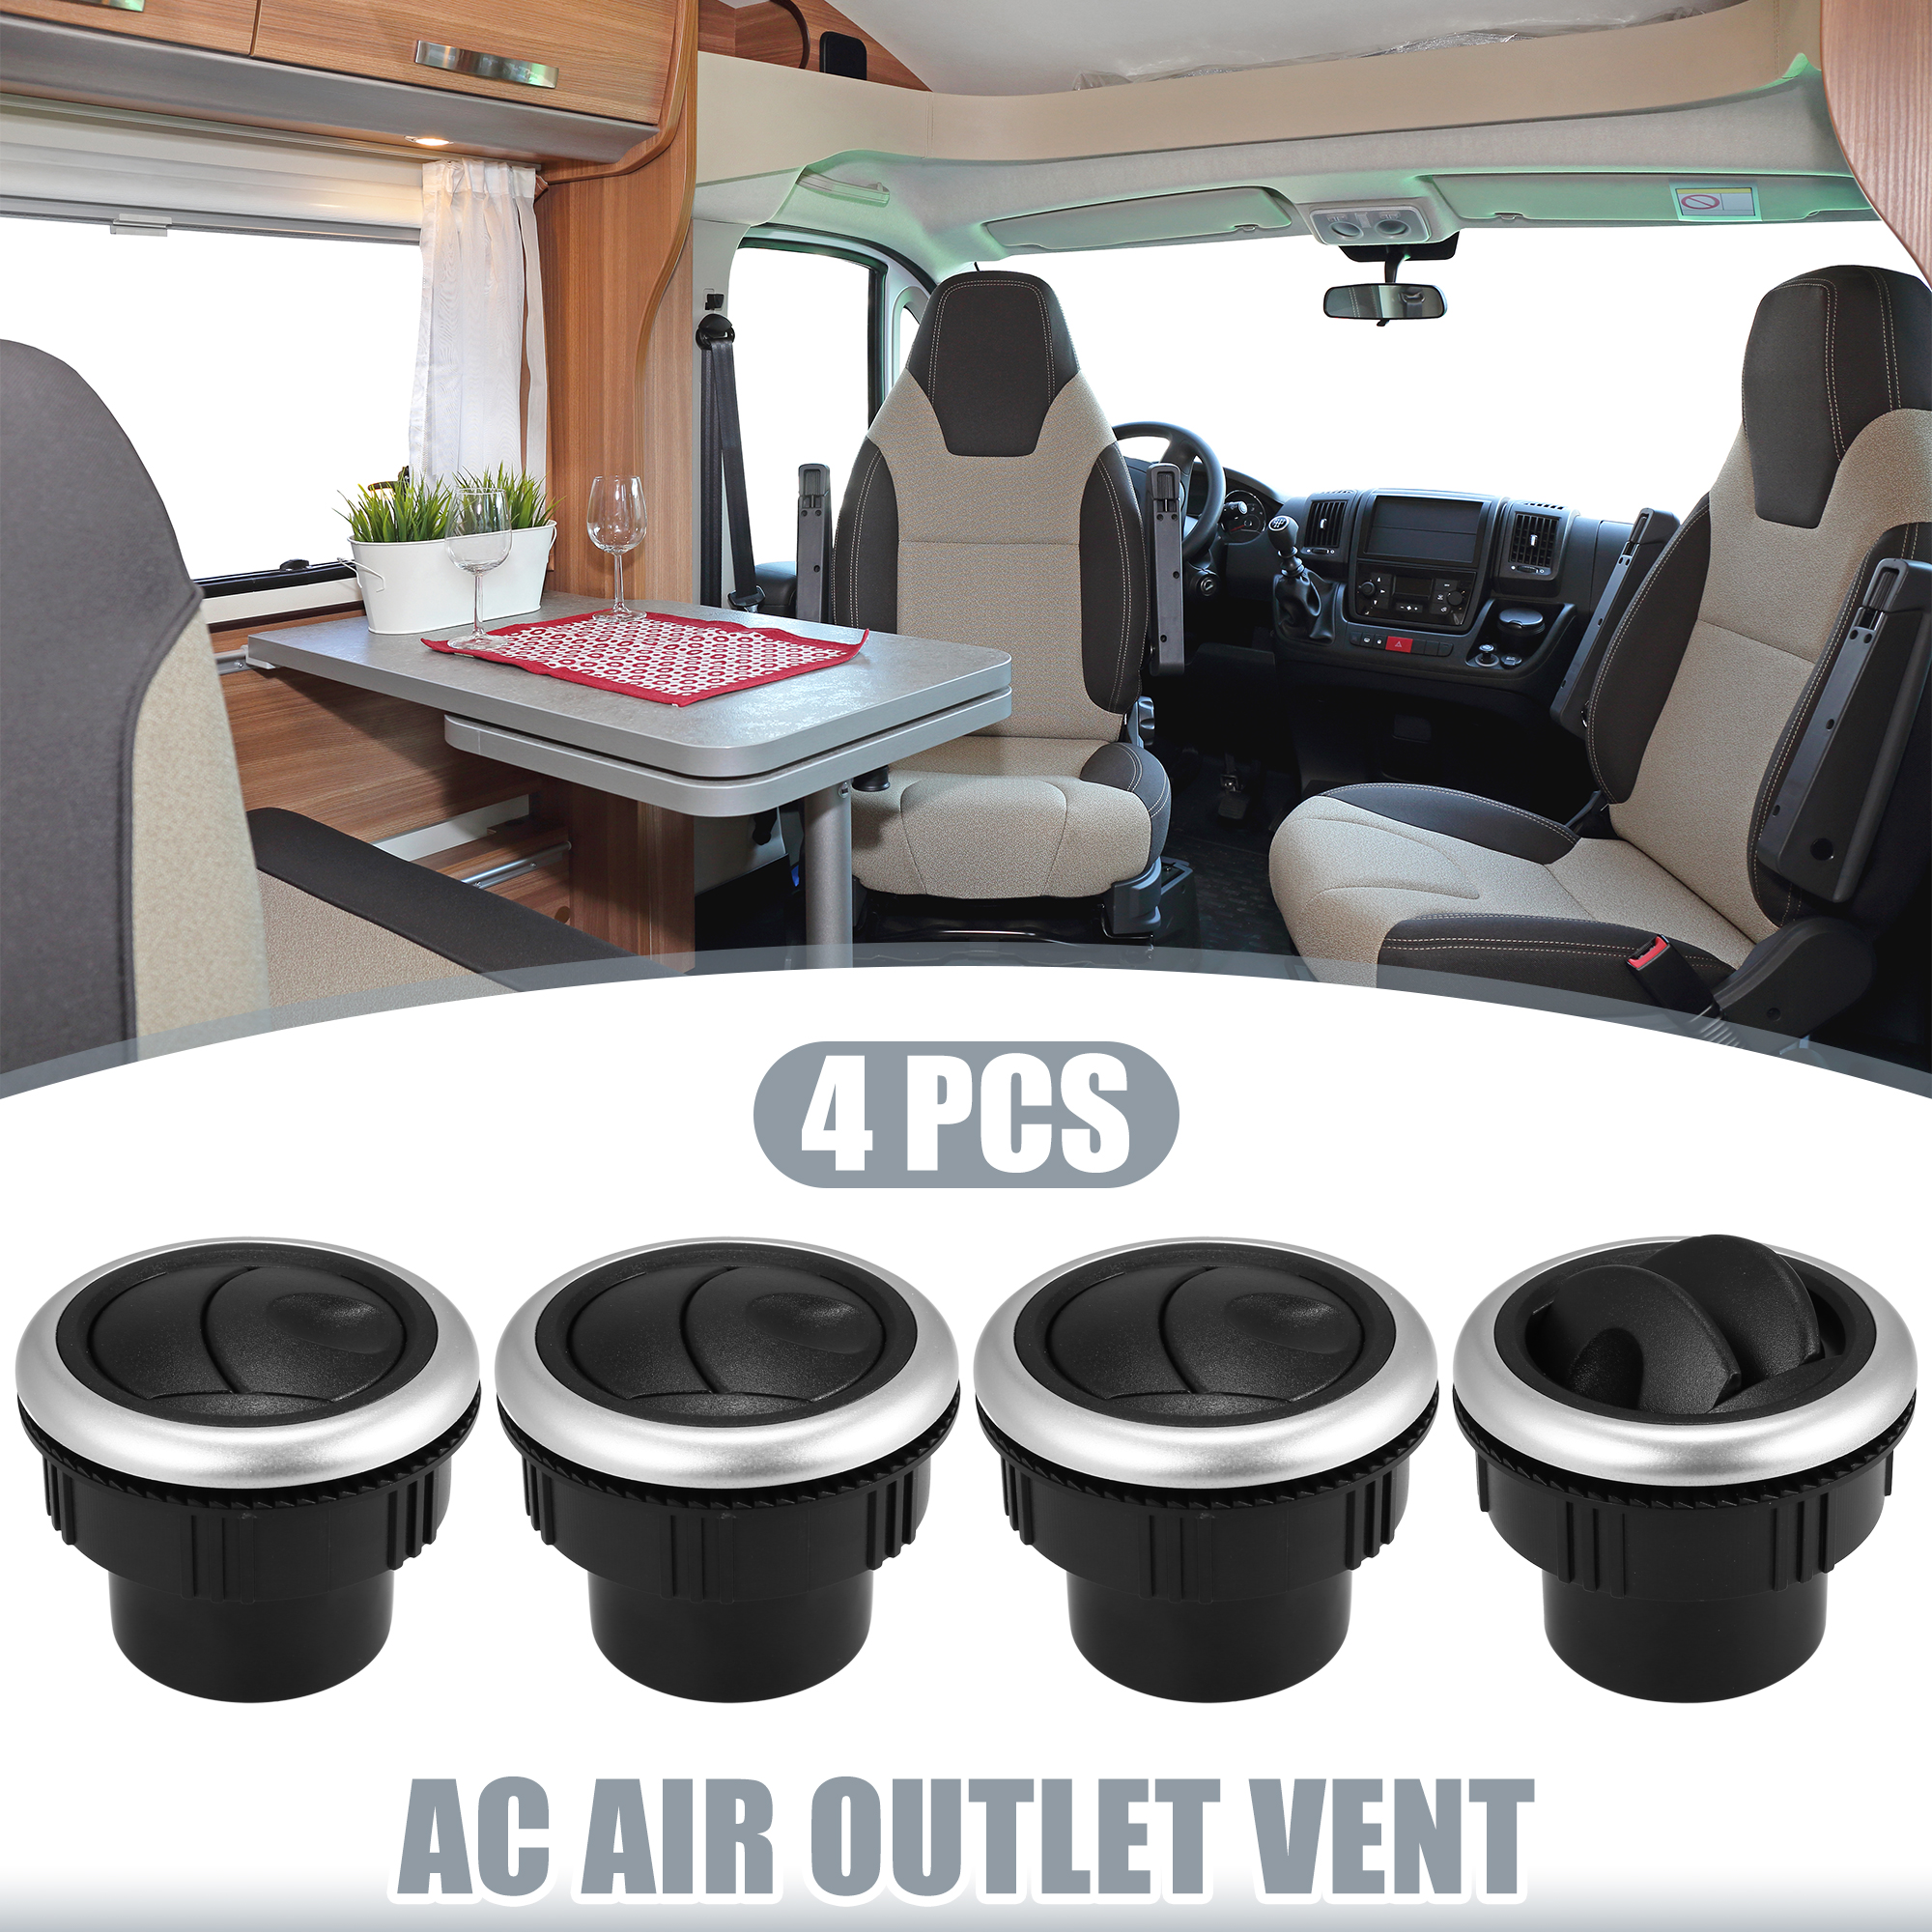 Unique Bargains 4pcs Universal Vent Air Outlet Rotating Round Ceiling 48mm Black for Car Bus RV